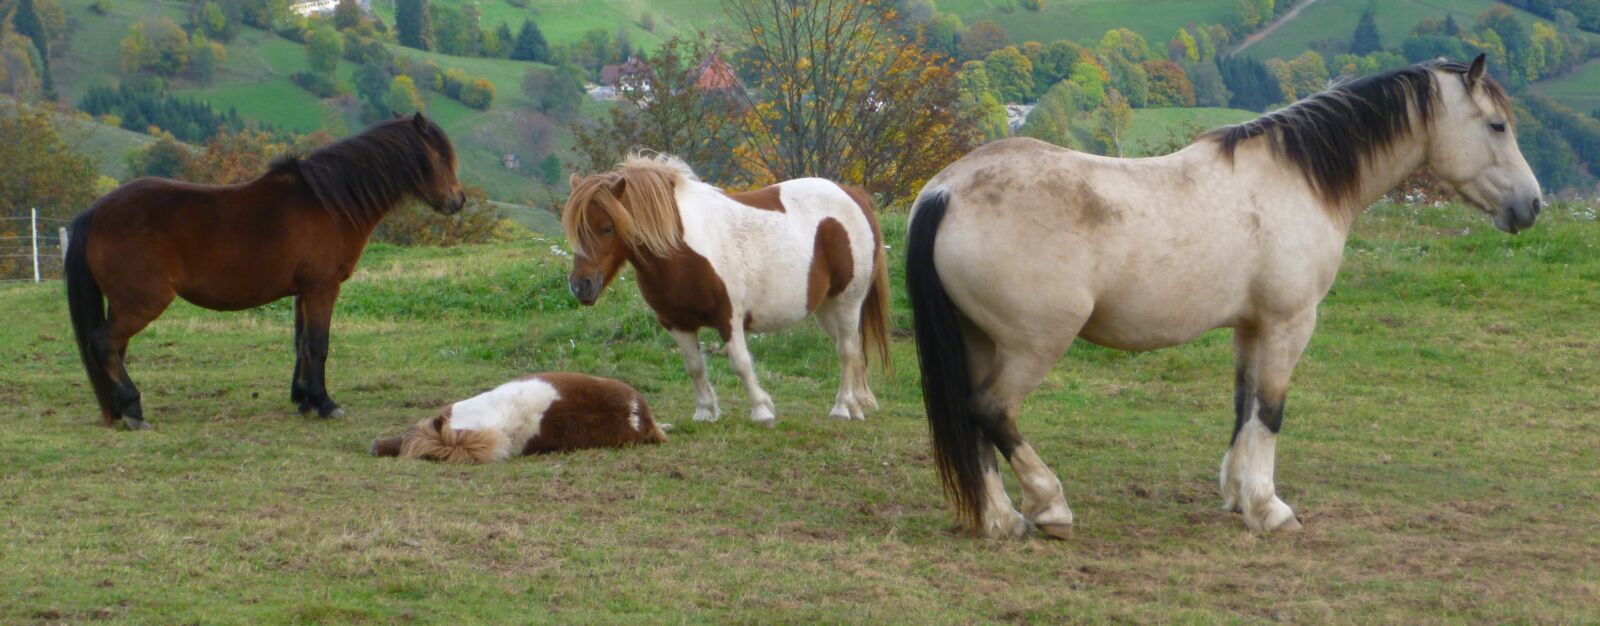 Panasonic DMC-SZ3 sample photo. Horse, meadow, animal photography